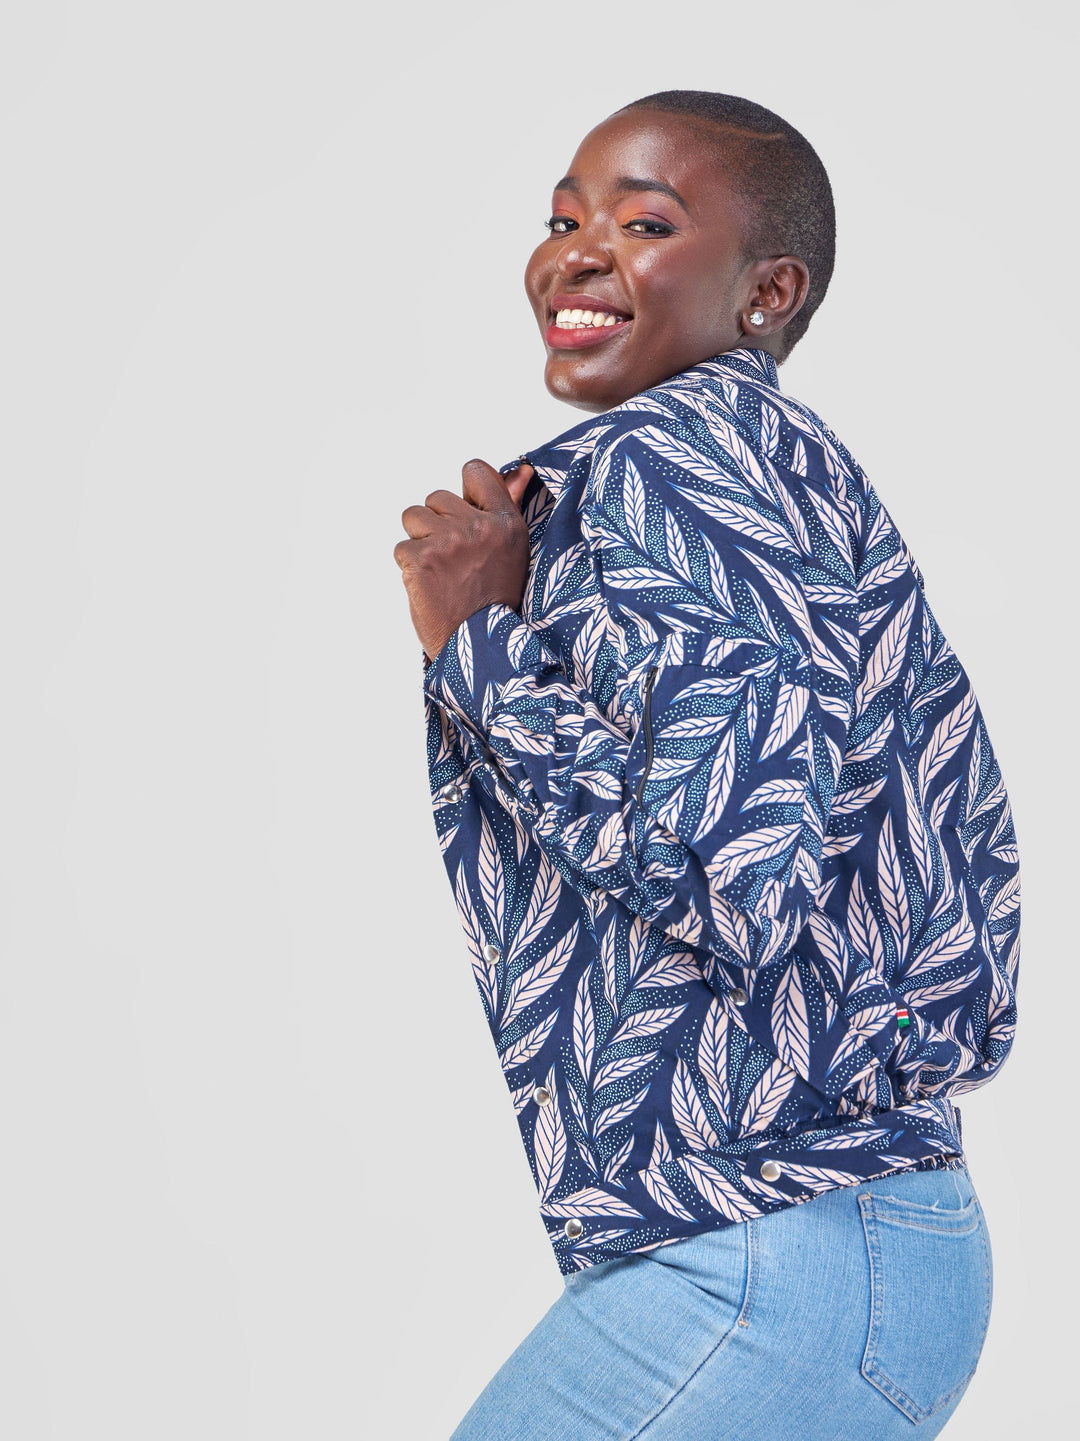 Button-up jacket with collar ‚Mwangaza‘ - mikono.africa Jacken aus Kenia bunte Bomberjacke Partyjacke faire sozial nachhaltig designed in Kenia